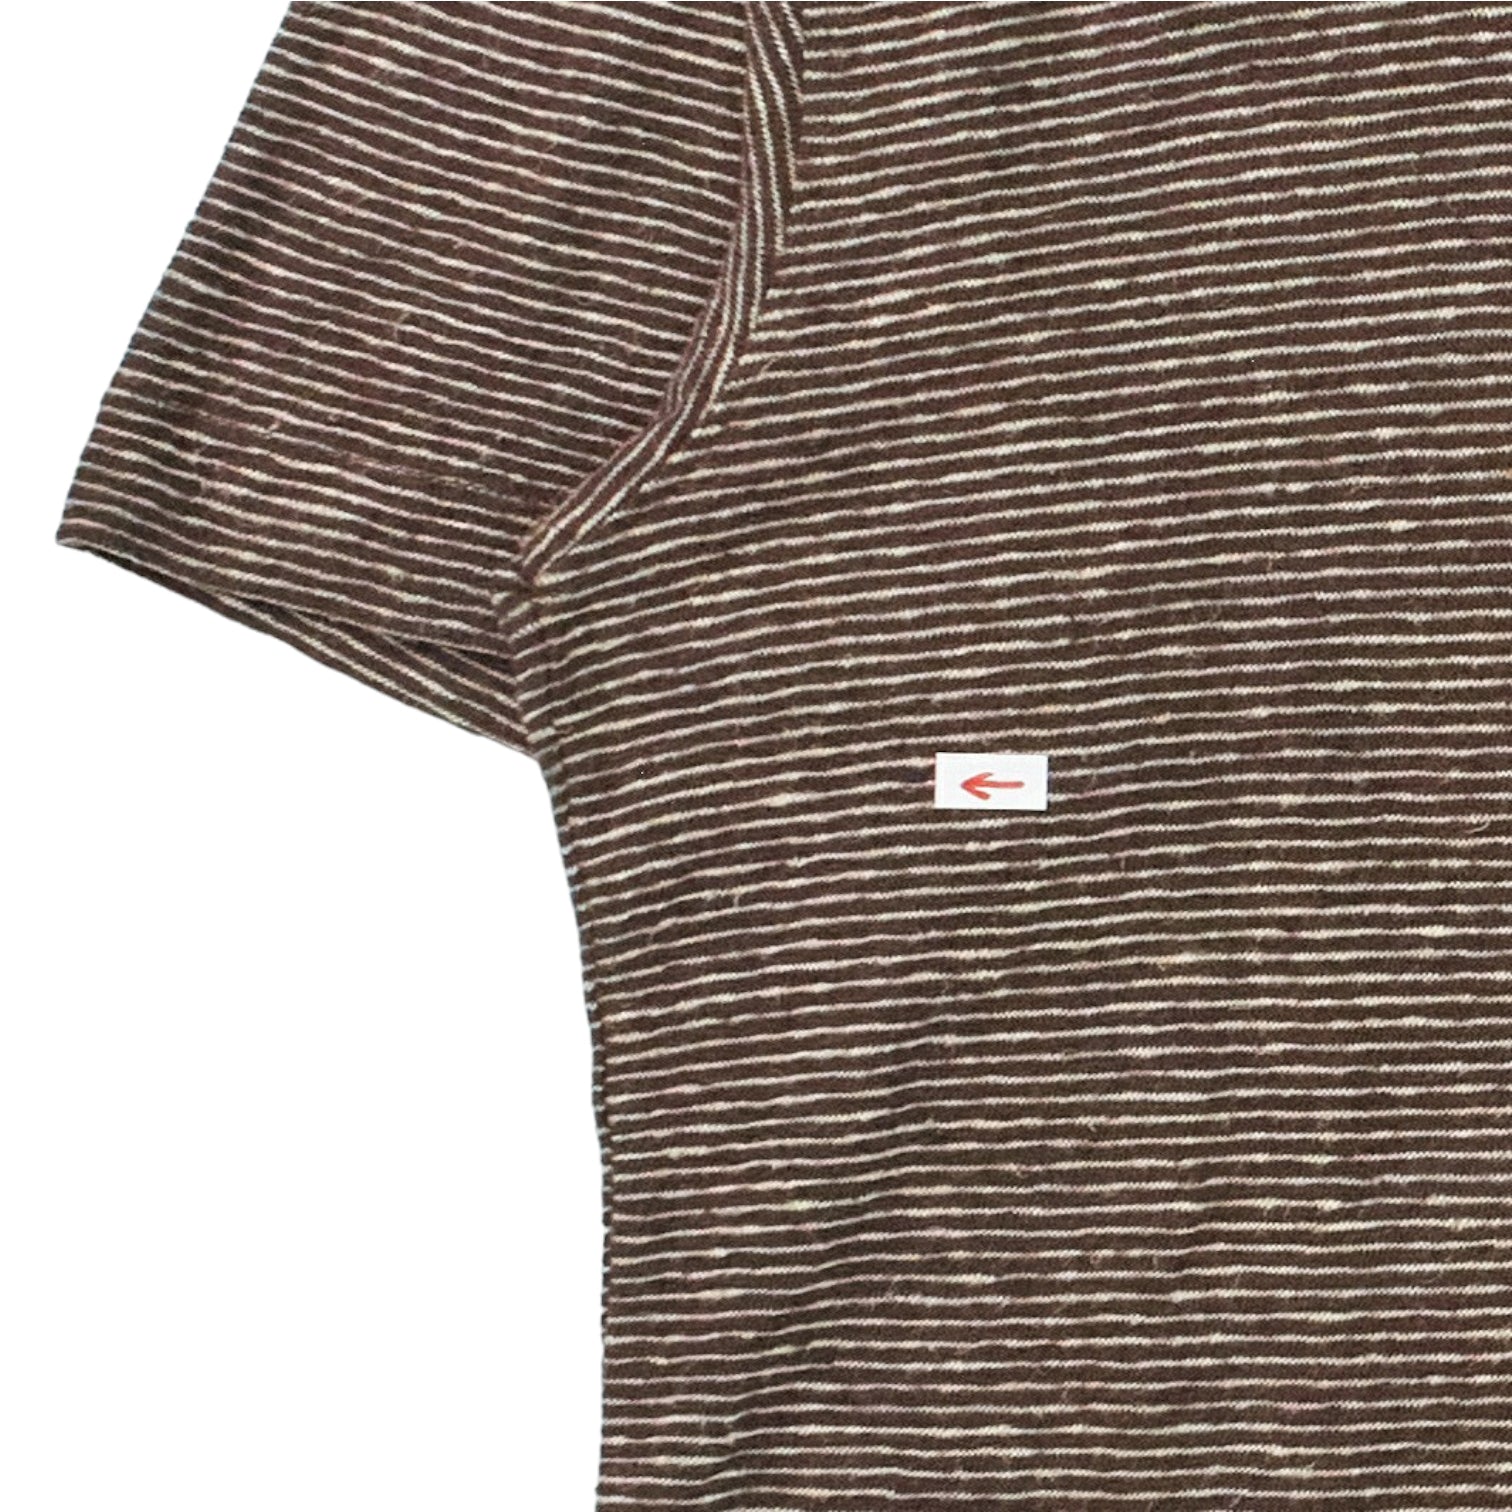 YMC Brown/Ecru Triple T Shirt